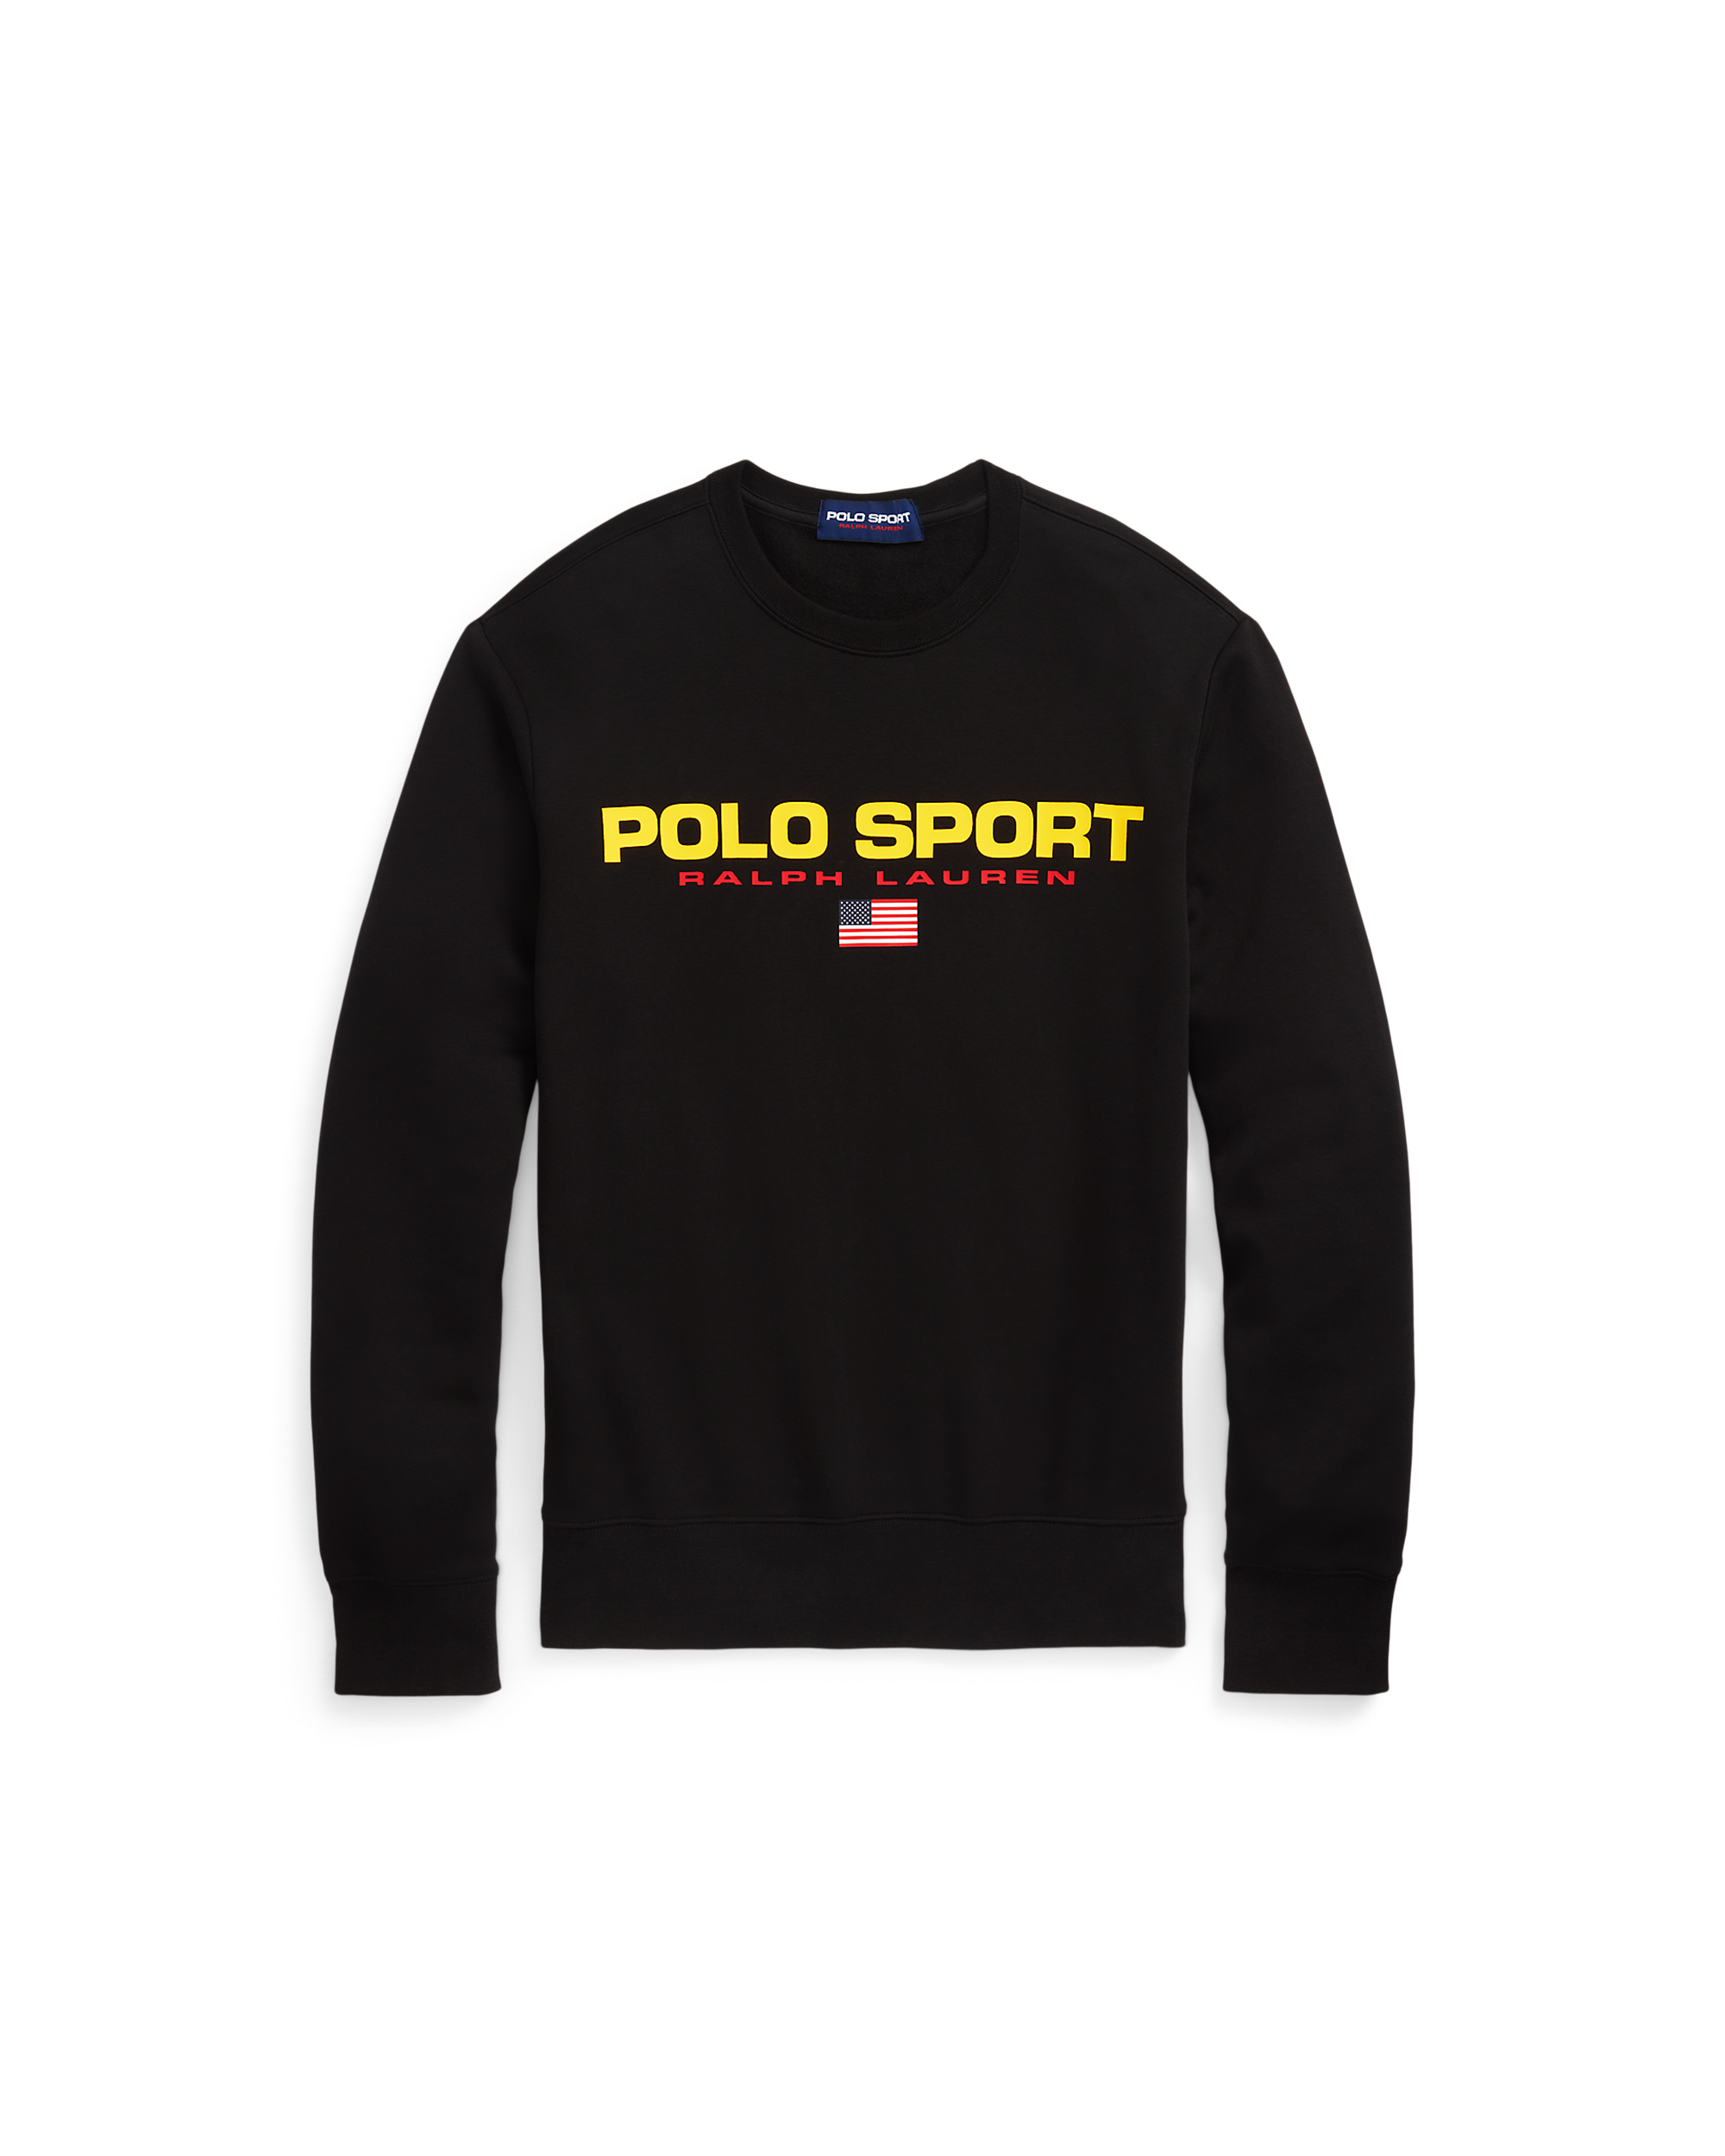 Polo Sport Sweatshirt - Black